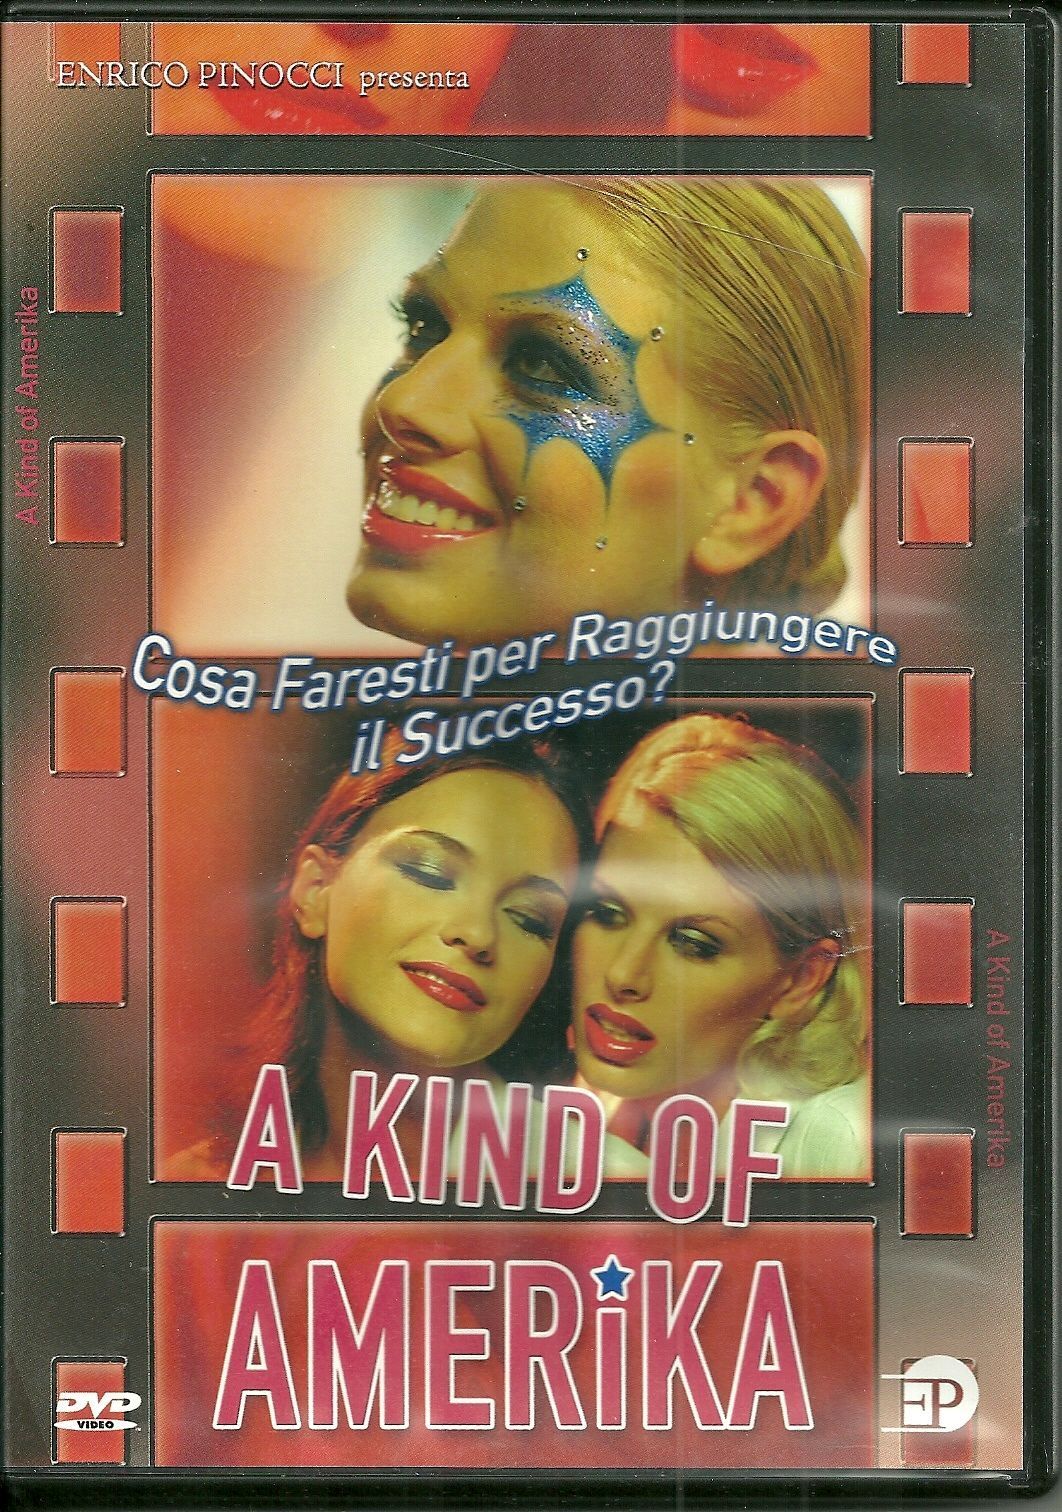 KIND OF AMERICA-ENRICO PINOCCI - EP - 2002 - DVD - M dvd usato